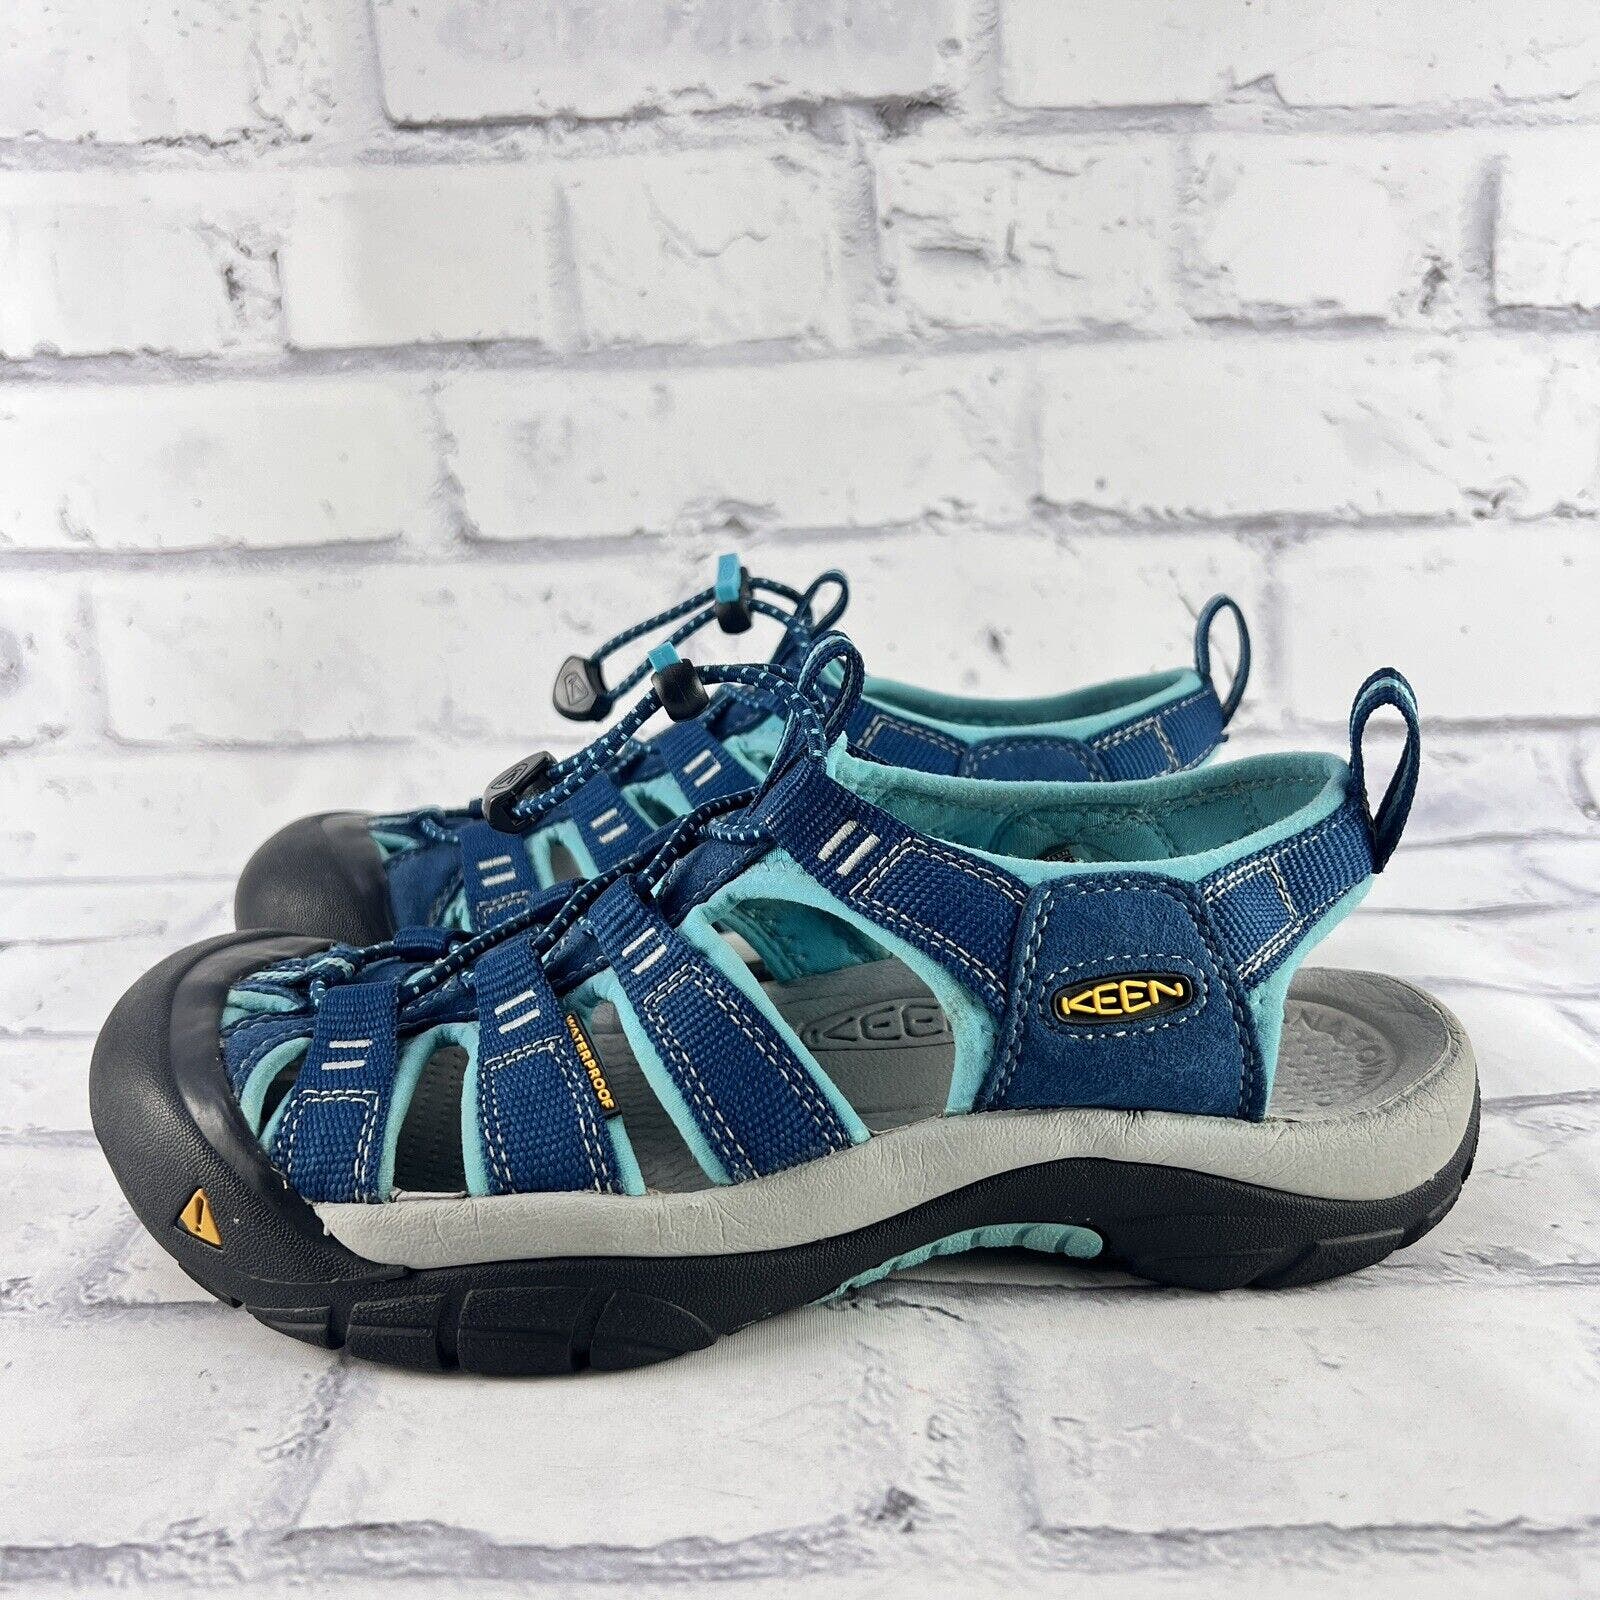 KEEN Newport H2 Hiking Sandal Women’s 7.5 Waterproof Blue Outdoor Water Shoe